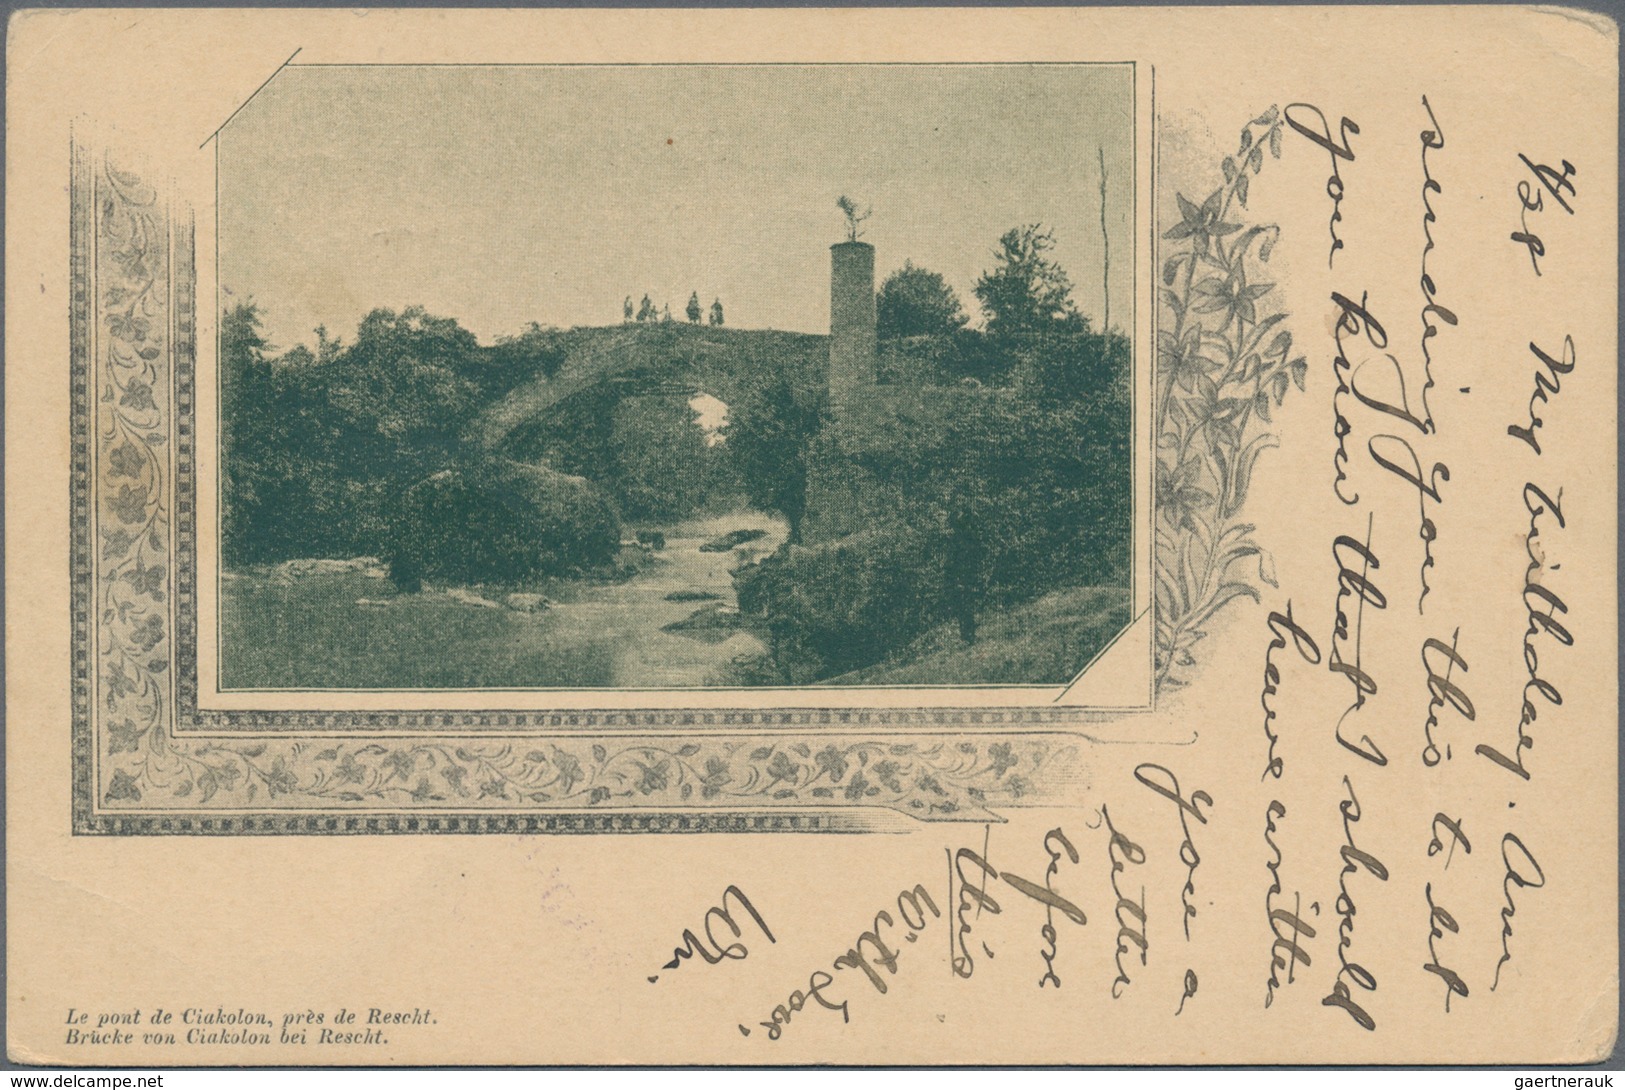 Iran: 1915, Stationery Card 5 Chahis/5 Ch. Carmine Tied "TAURIS 1-V 15" To Ilion/NY, USA, Two-line V - Iran